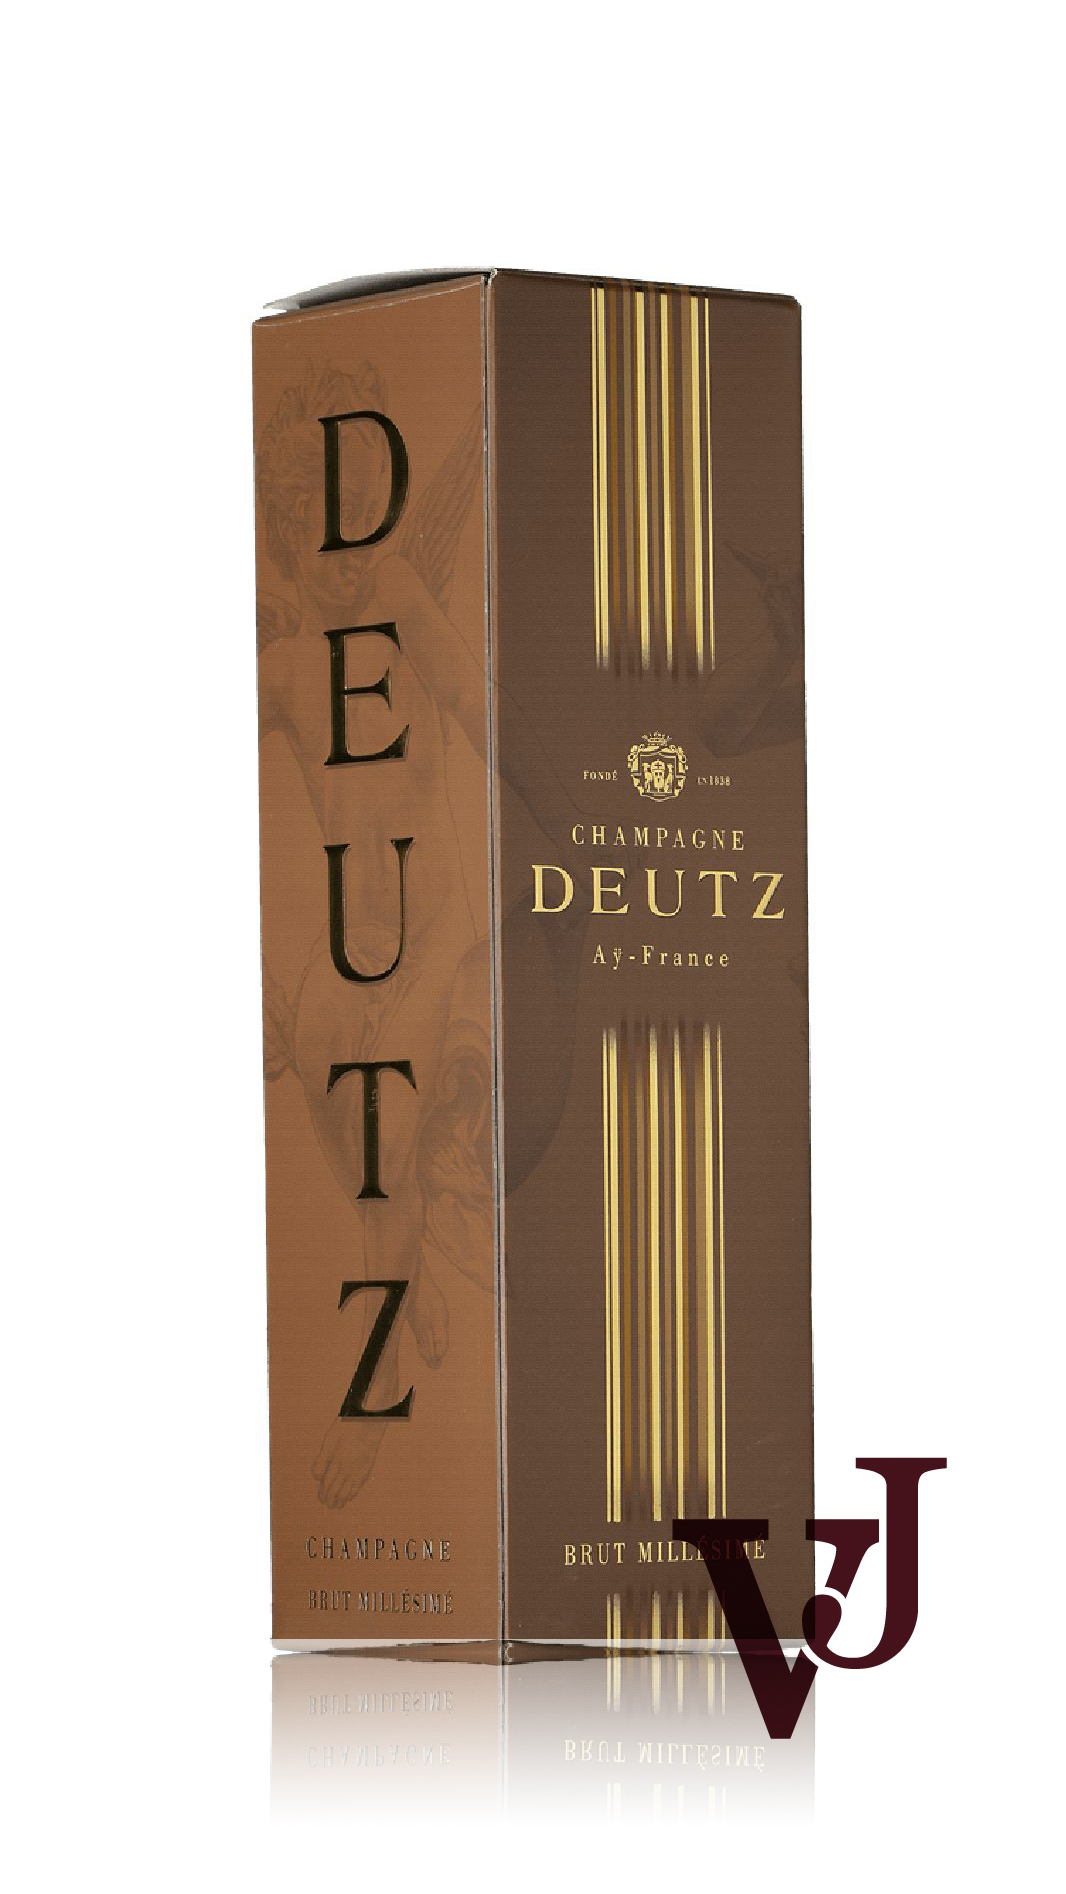 Mousserande Vin - Deutz Brut Millésimé 2016 artikel nummer 9314201 från producenten Champagne Deutz från Frankrike